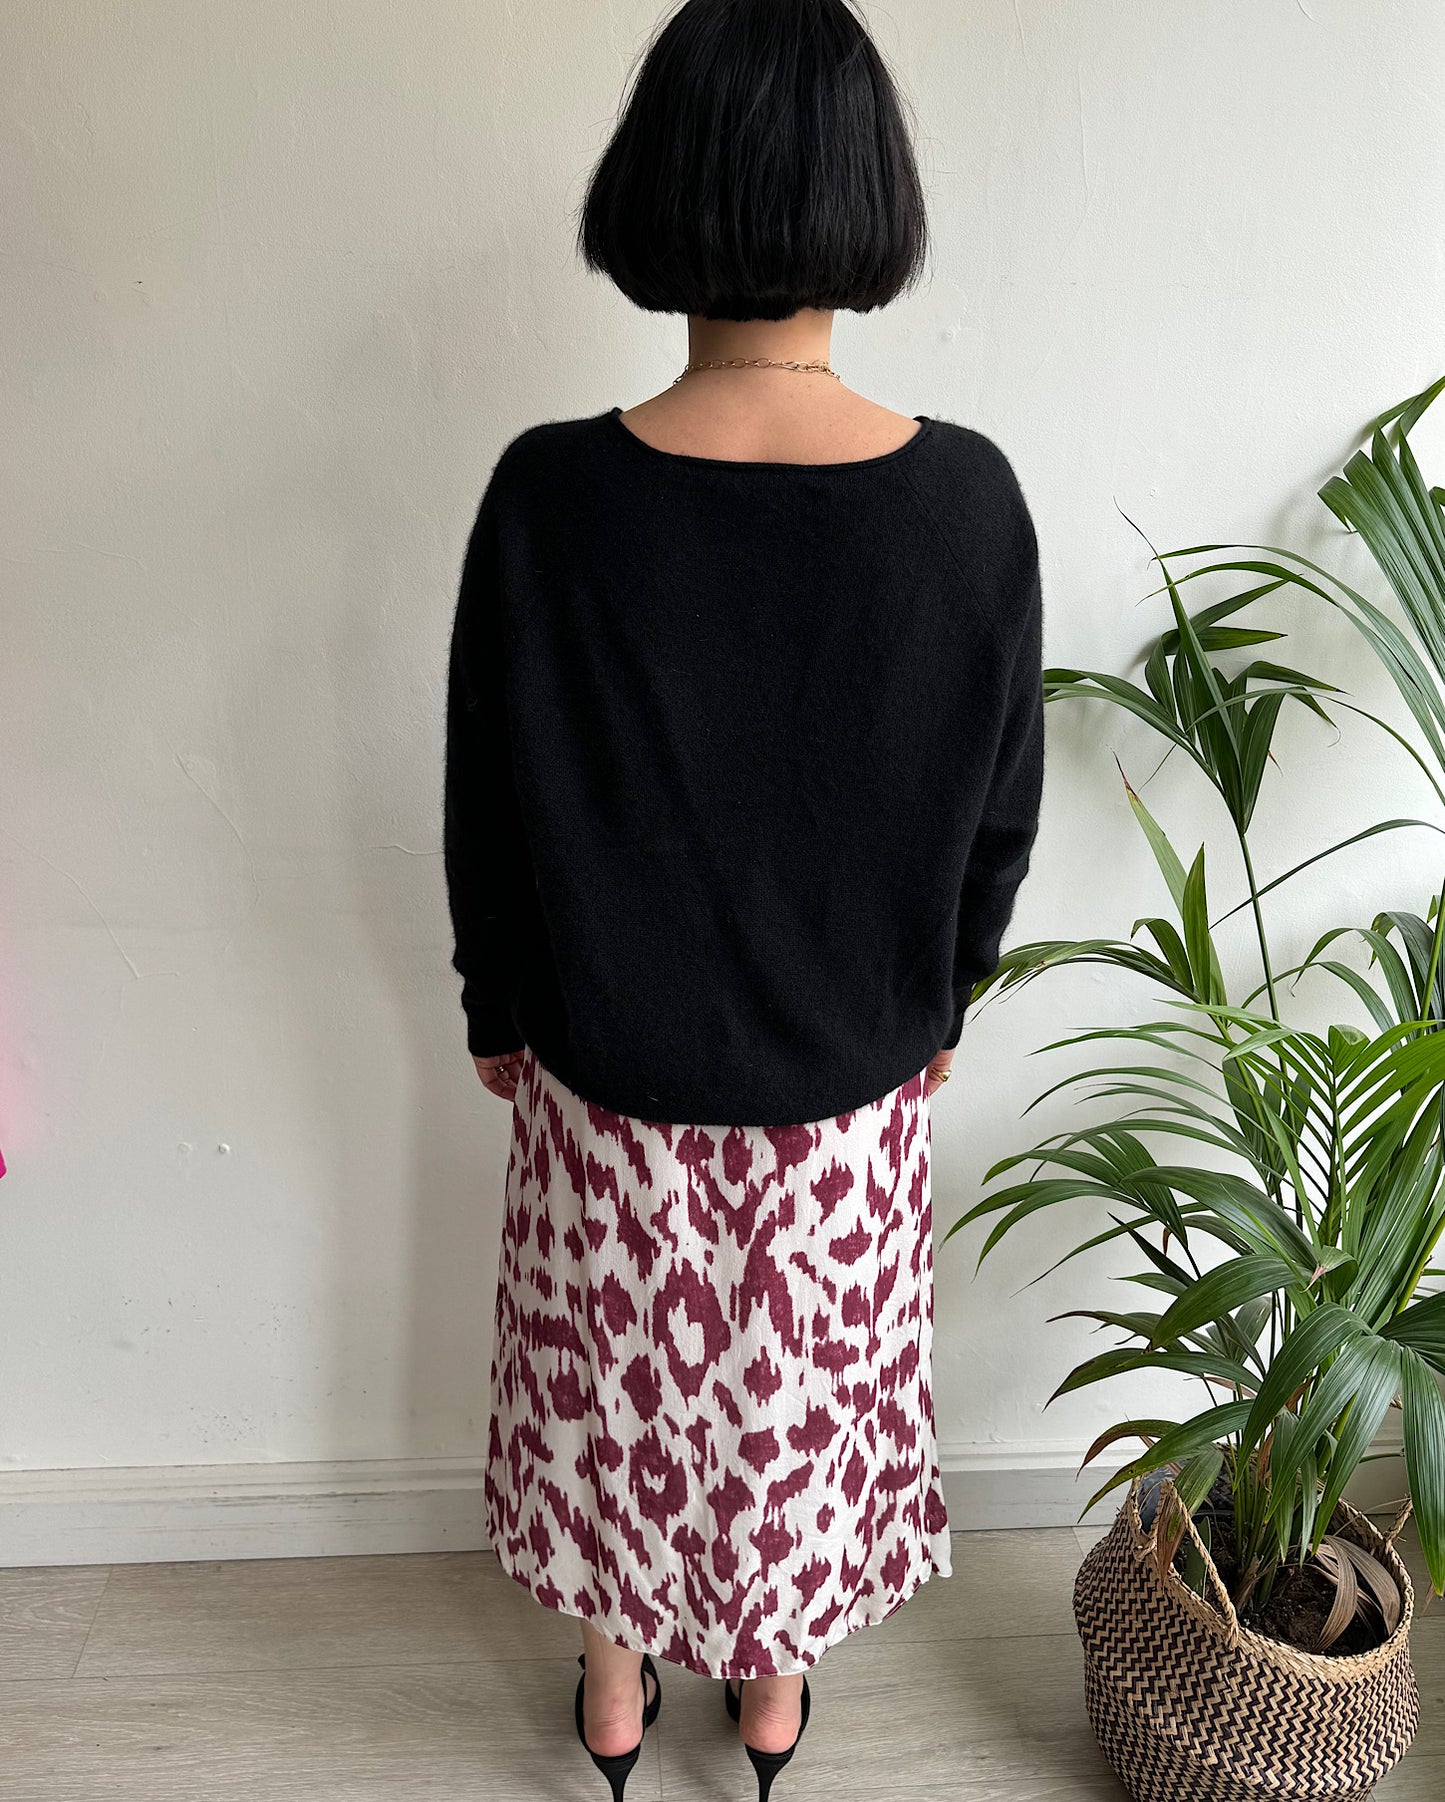 Patterned Silk Skirt ~ Size 10